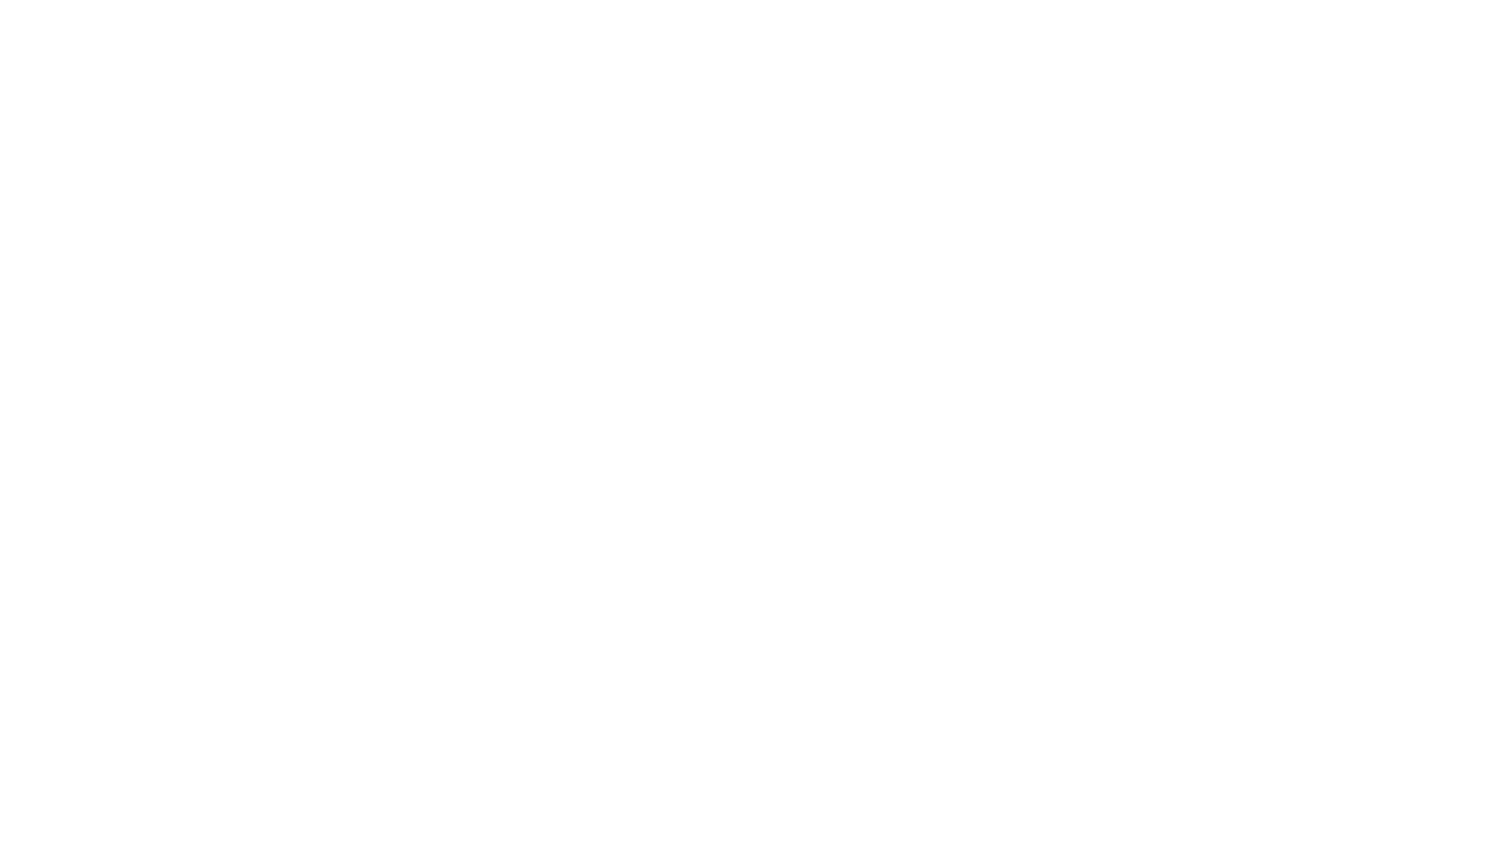 Grant Excavation